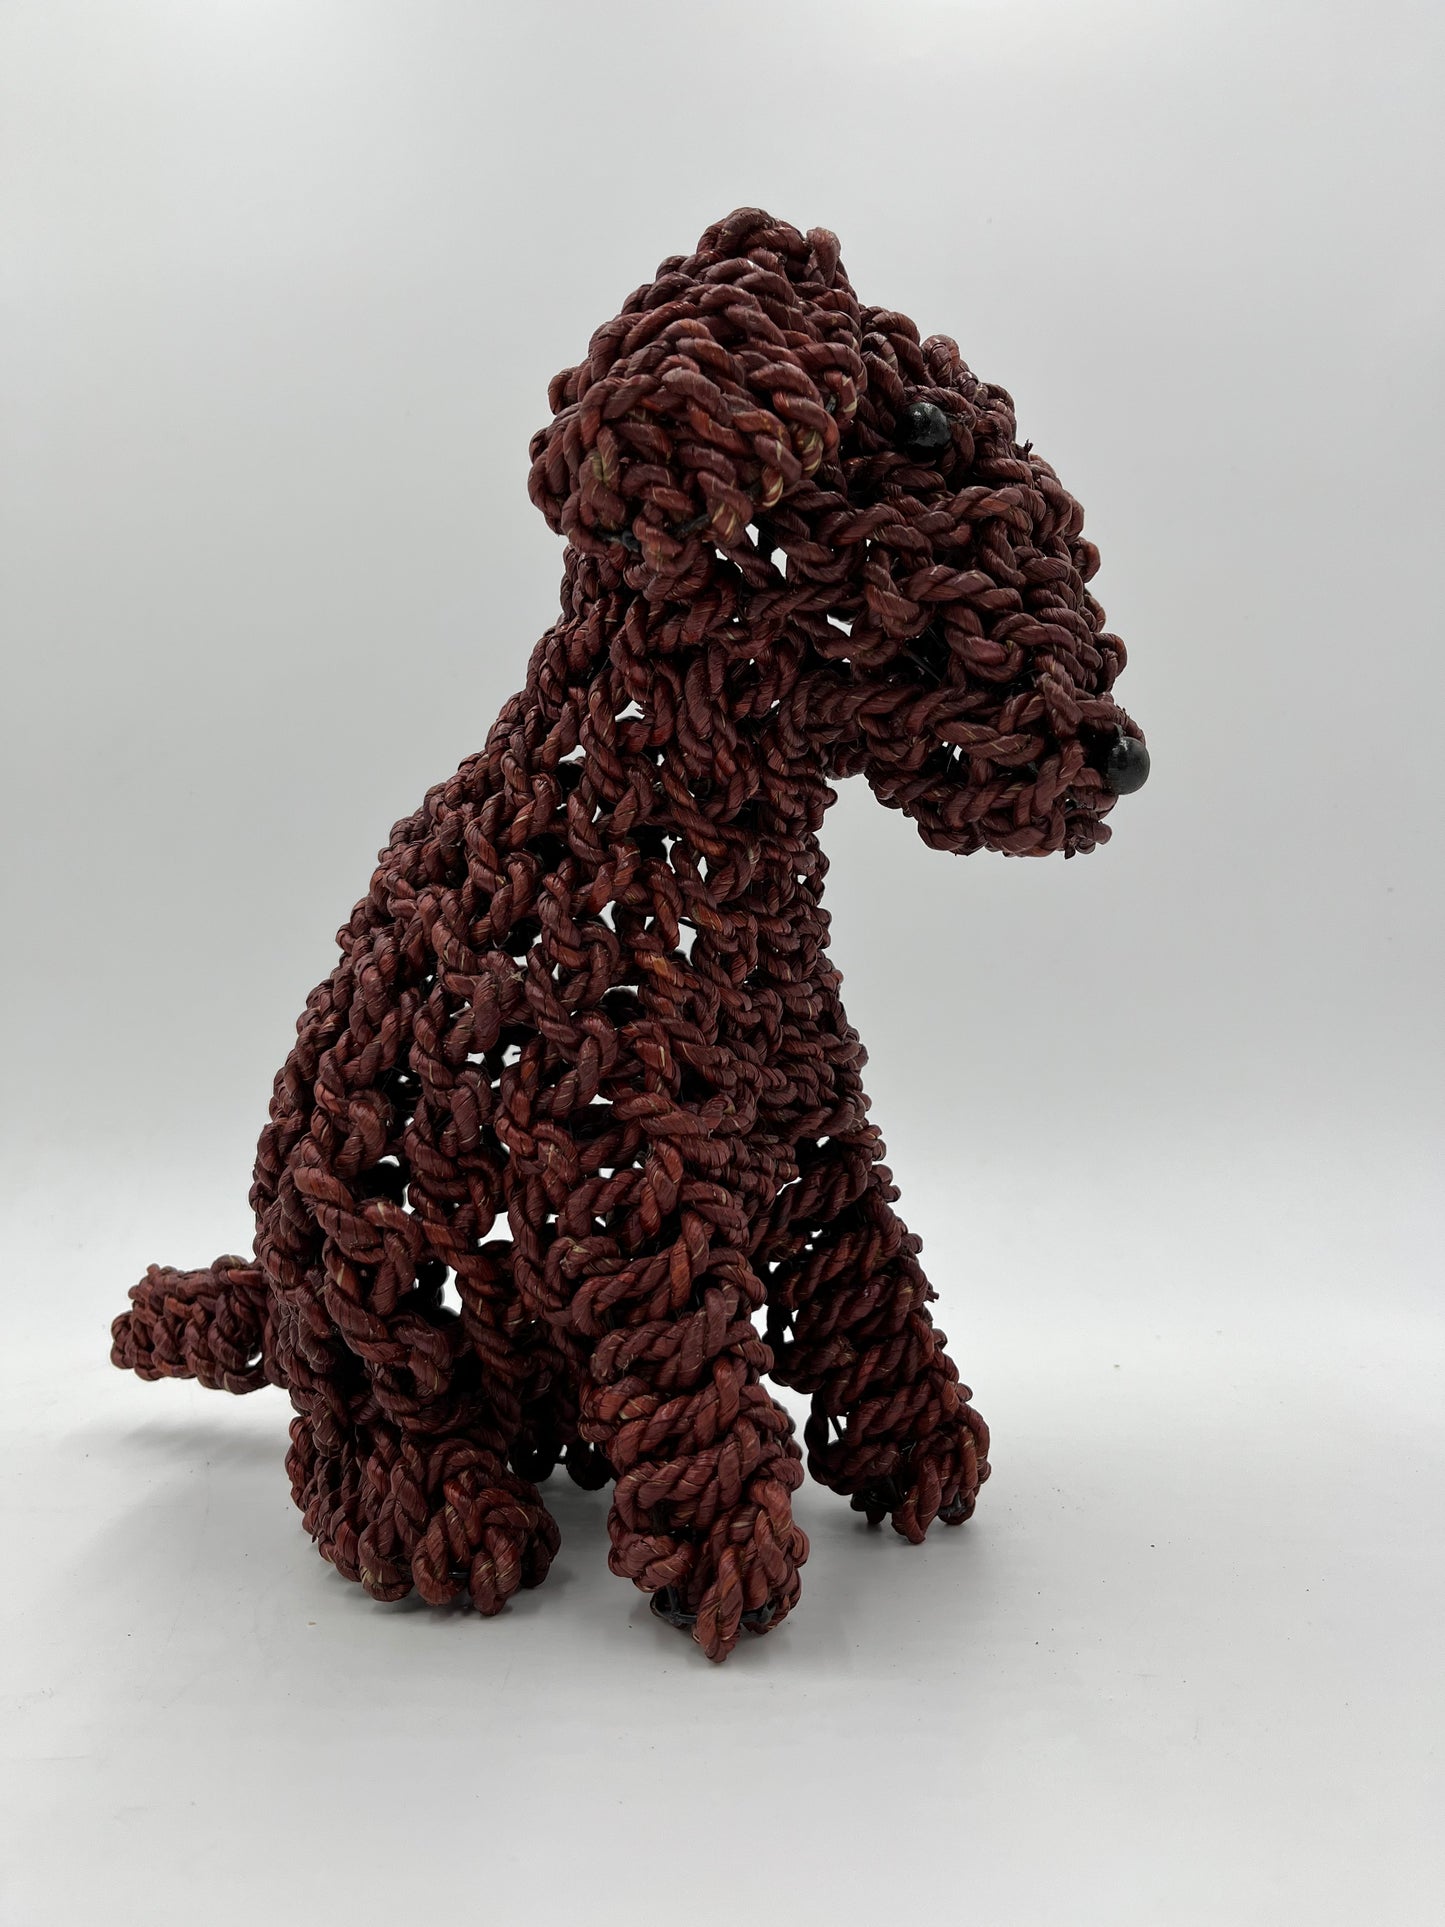 Rope Dog: Small, Dark Brown